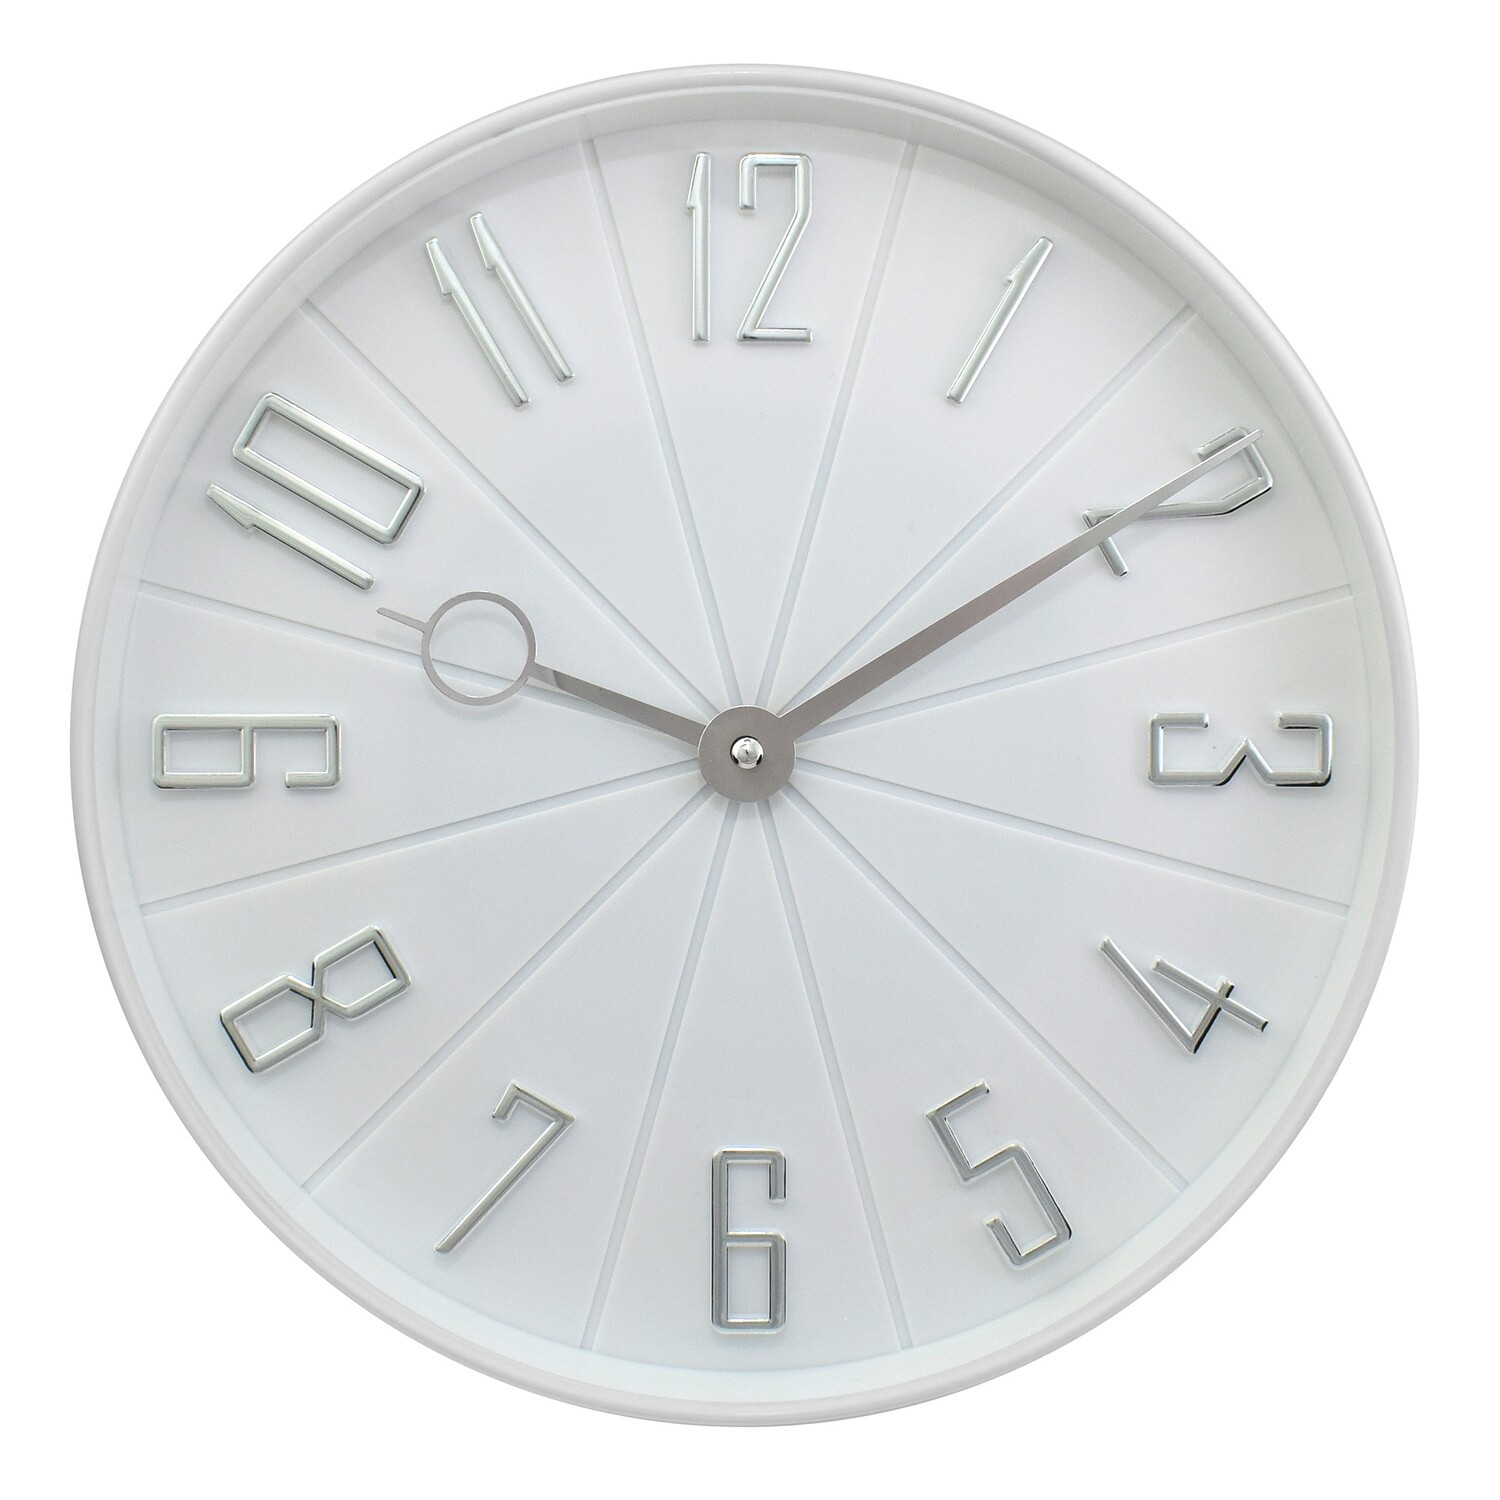 Westclox Modern White And Silver 12 Wall Clock Westclox Alarm Clocks